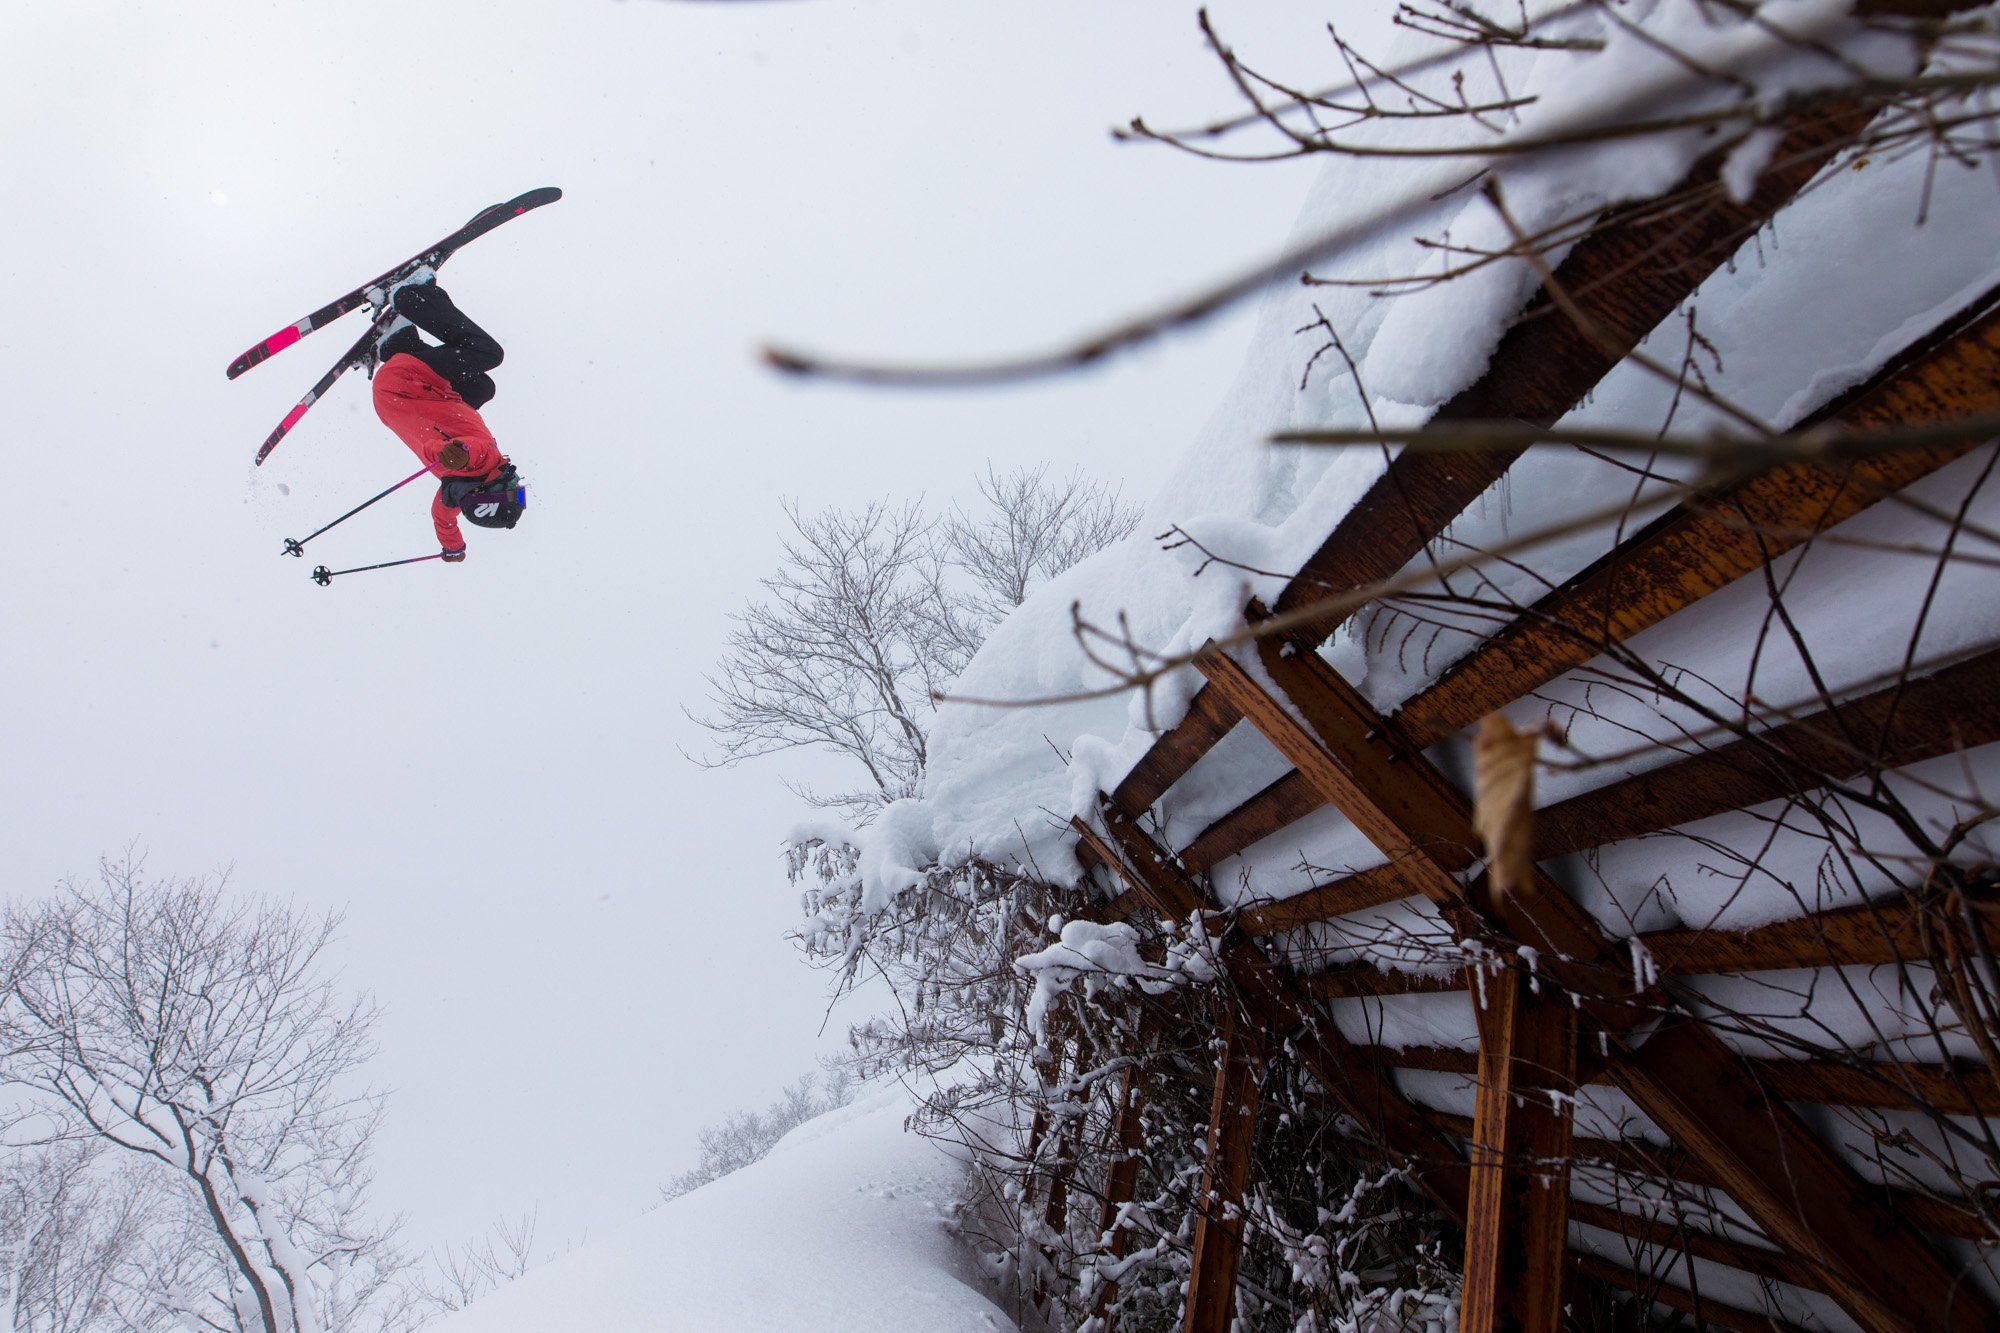 Zoya-Lynch-Skiing-Photography-Japan-26.jpg